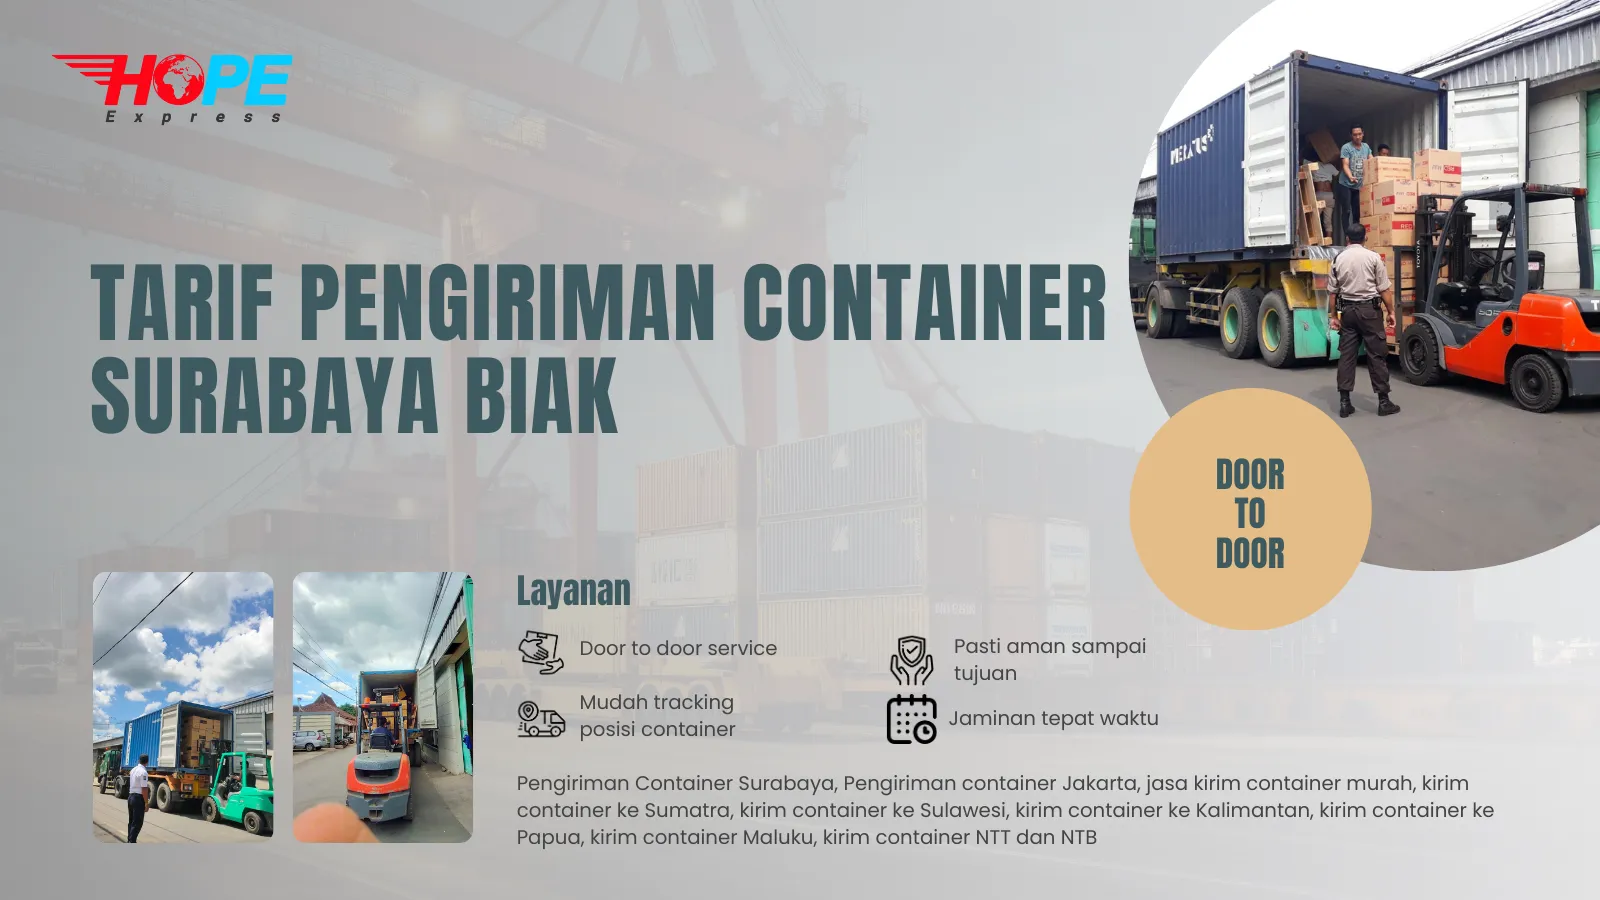 Tarif Pengiriman Container Surabaya Biak